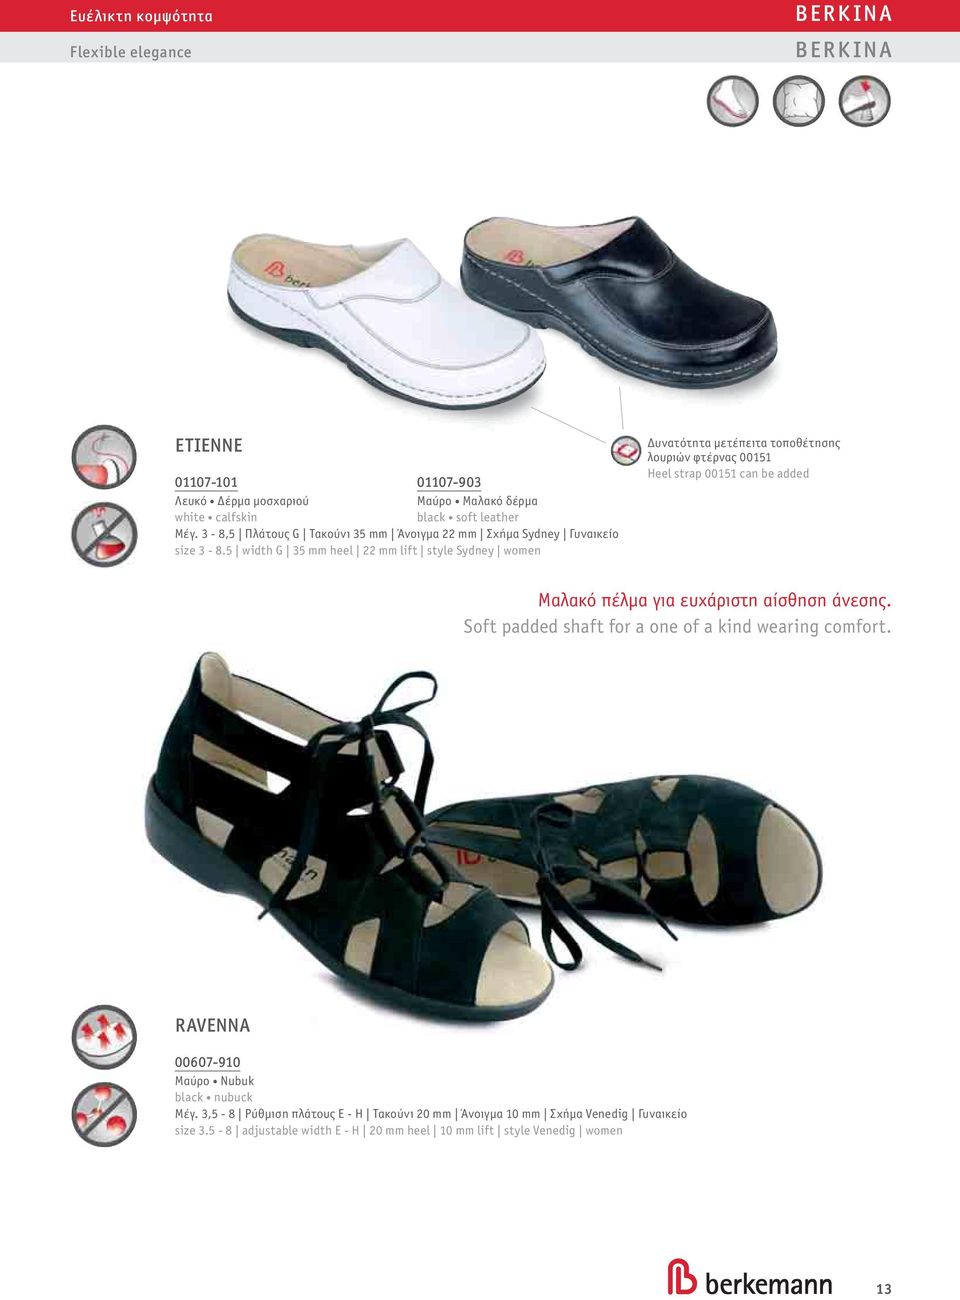 5 width G 35 mm heel 22 mm lift style Sydney women Δυνατότητα μετέπειτα τοποθέτησης λουριών φτέρνας 00151 Heel strap 00151 can be added Μαλακό πέλμα για ευχάριστη